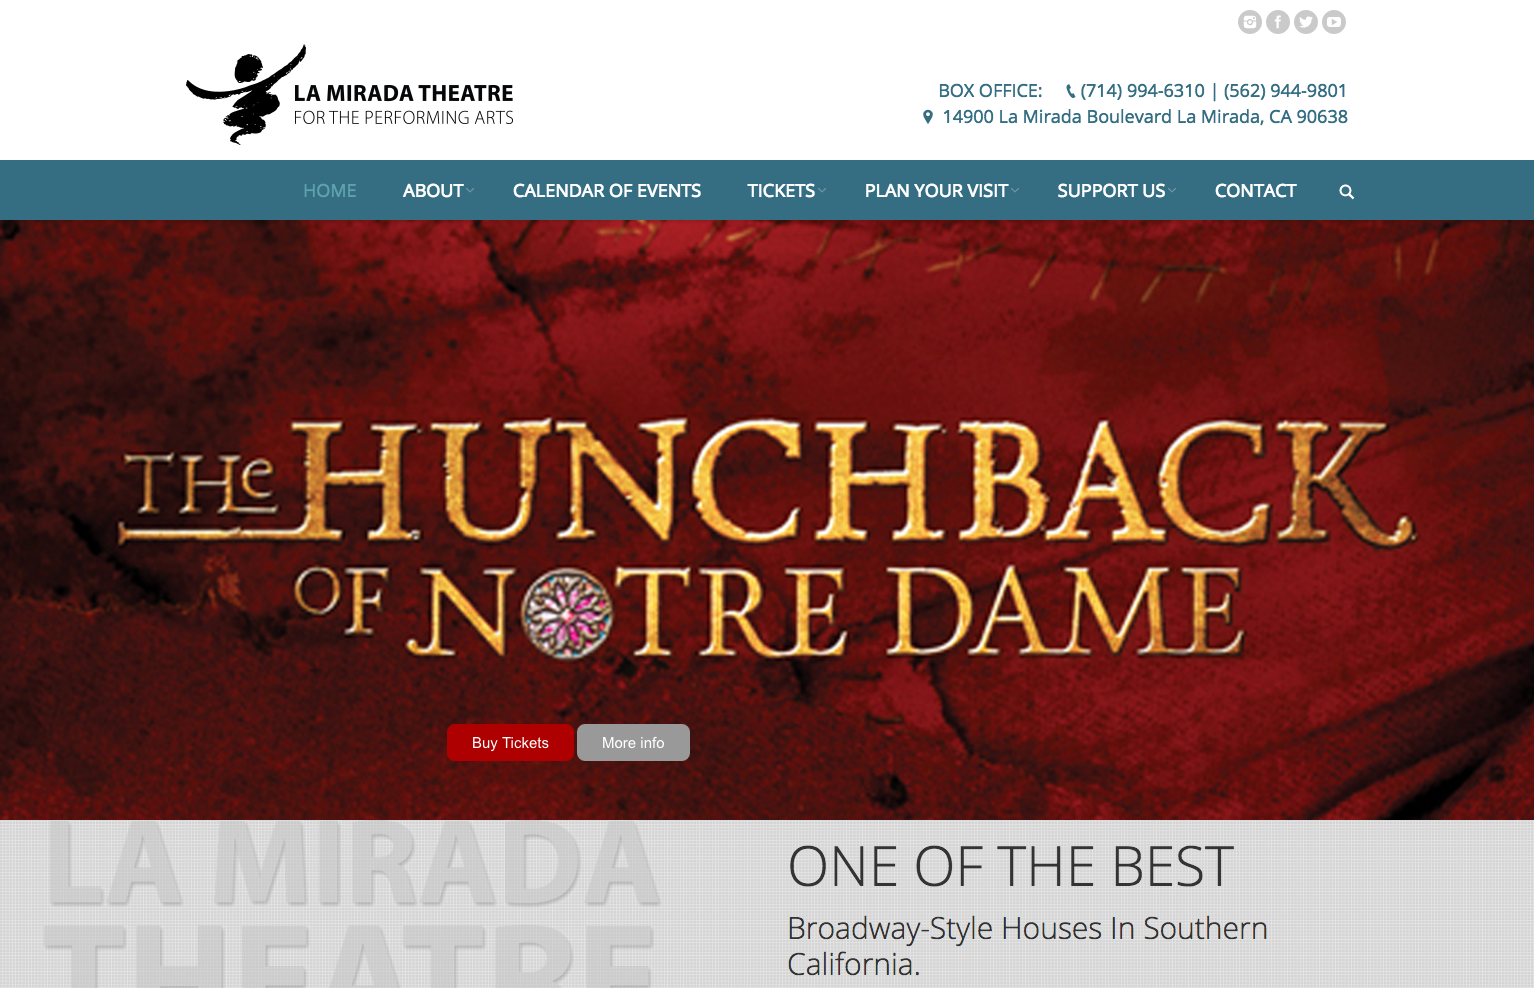 La Mirada Theatre website